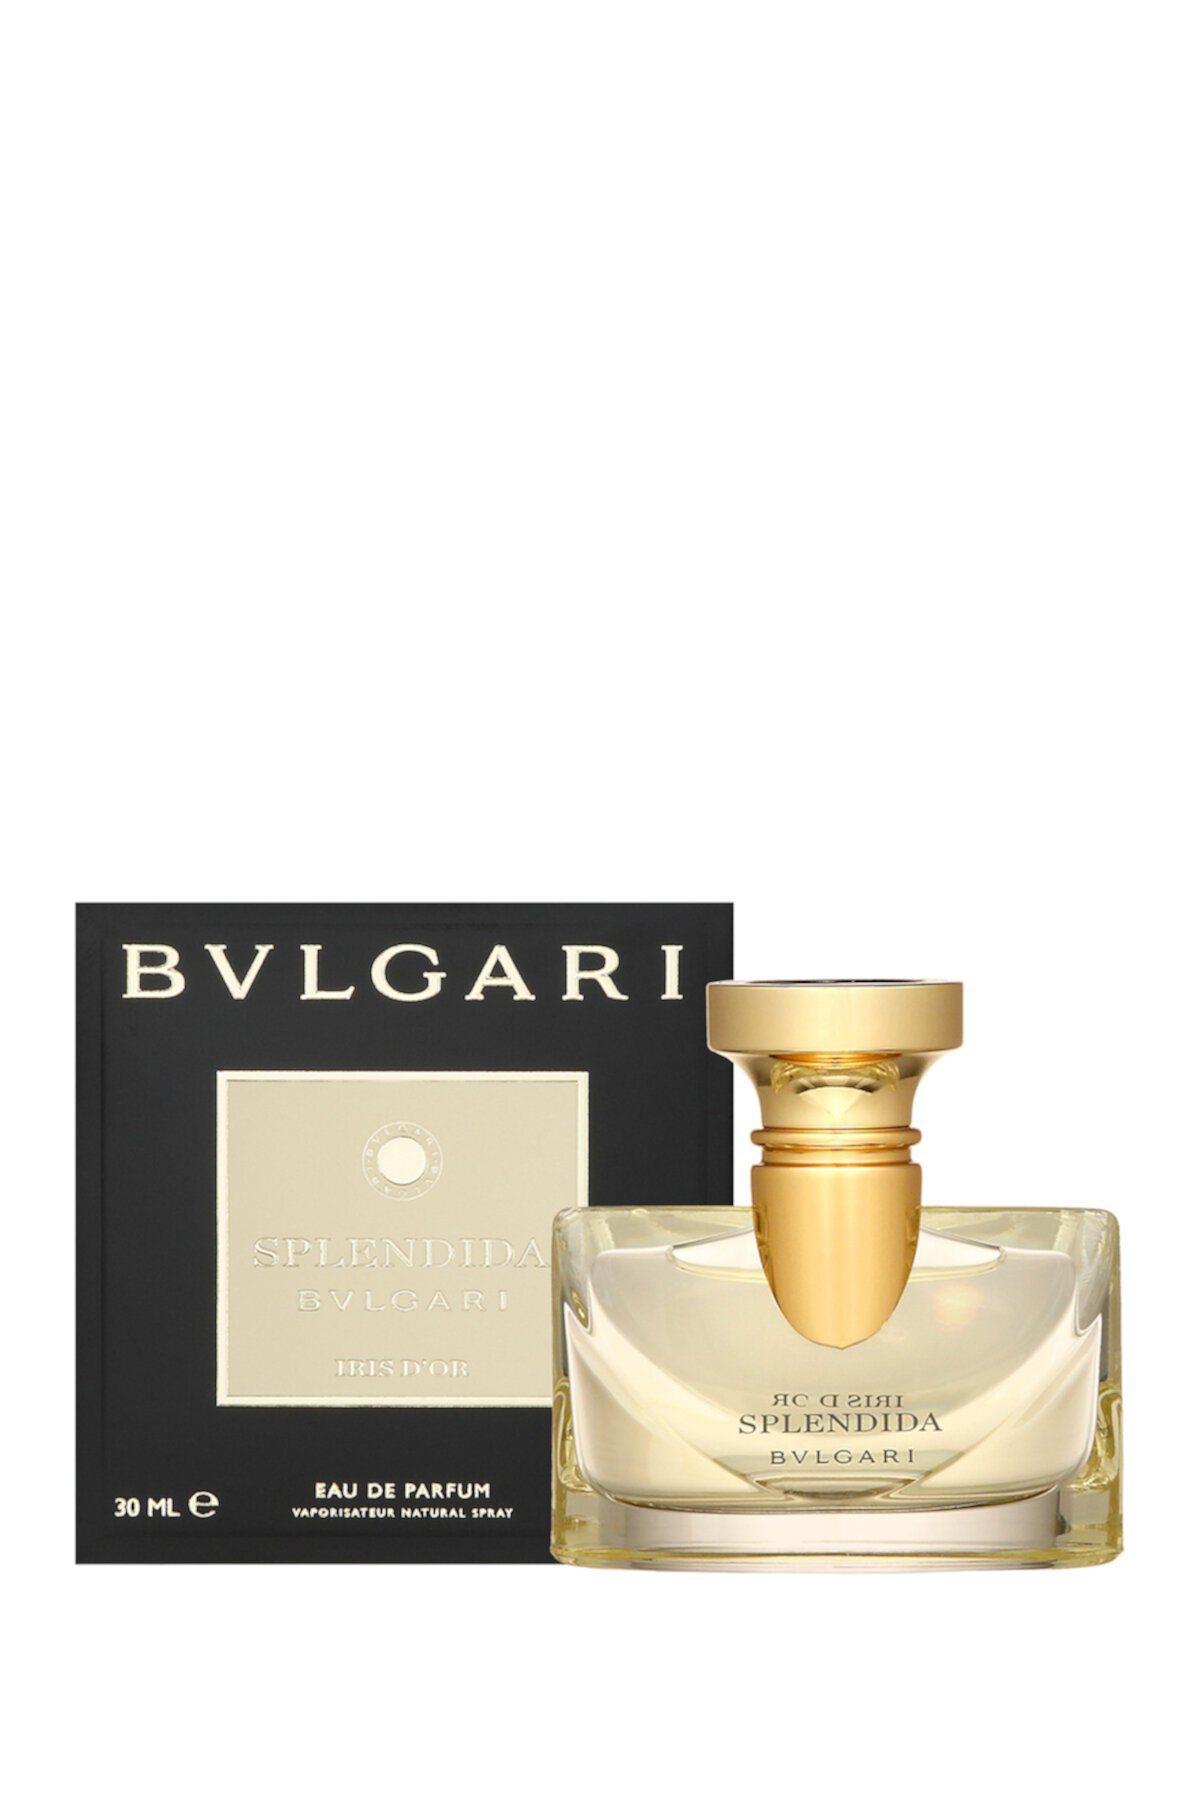 Splendida Iris D'Or Eau de Parfum - 1,0 эт. унция $ 12.99 Bvlgari